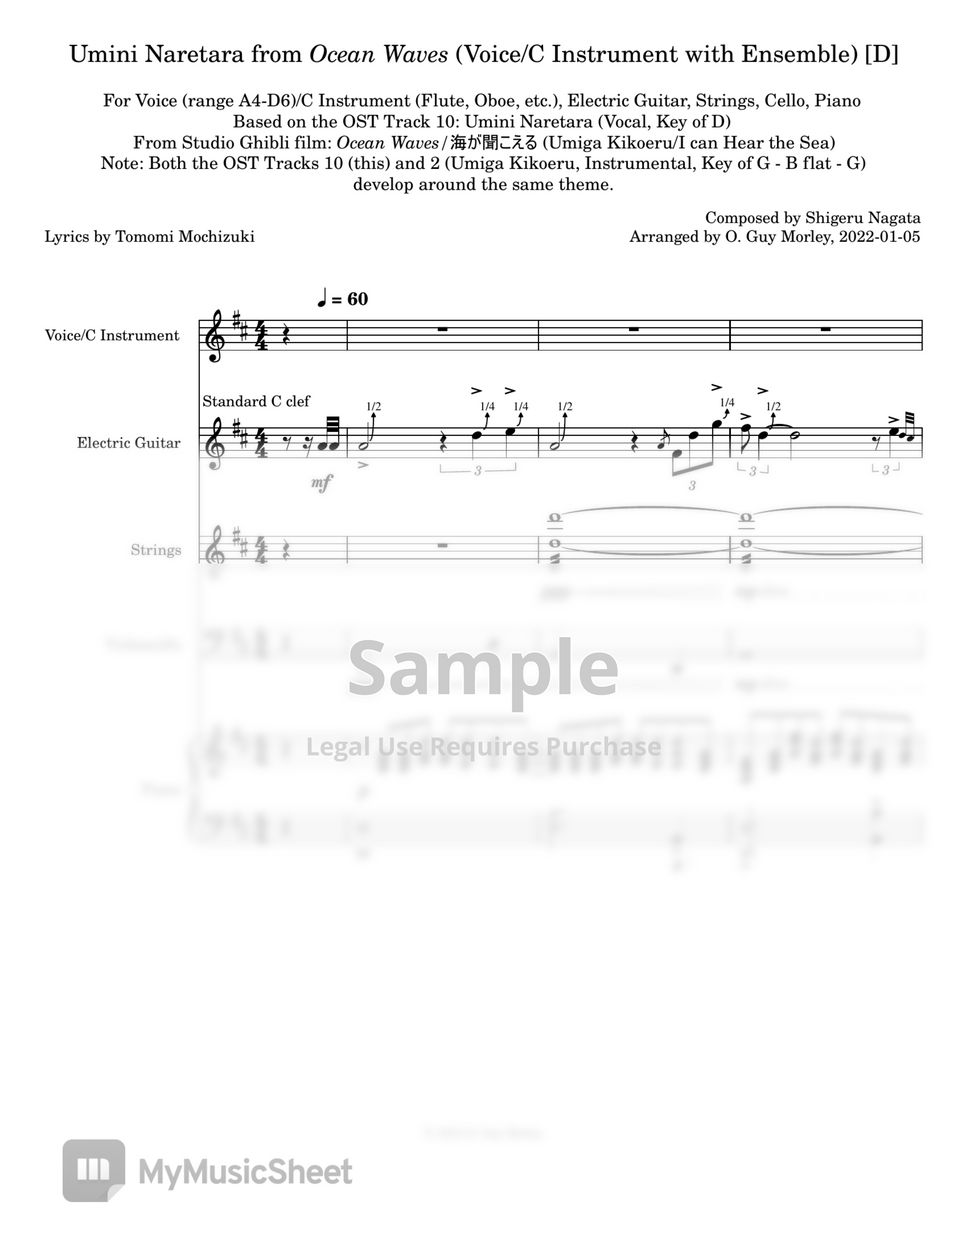 Ocean Waves/Umiga Kikoeru - Umini Naretara (Ensemble: Voice/Instruments) by O. Guy Morley